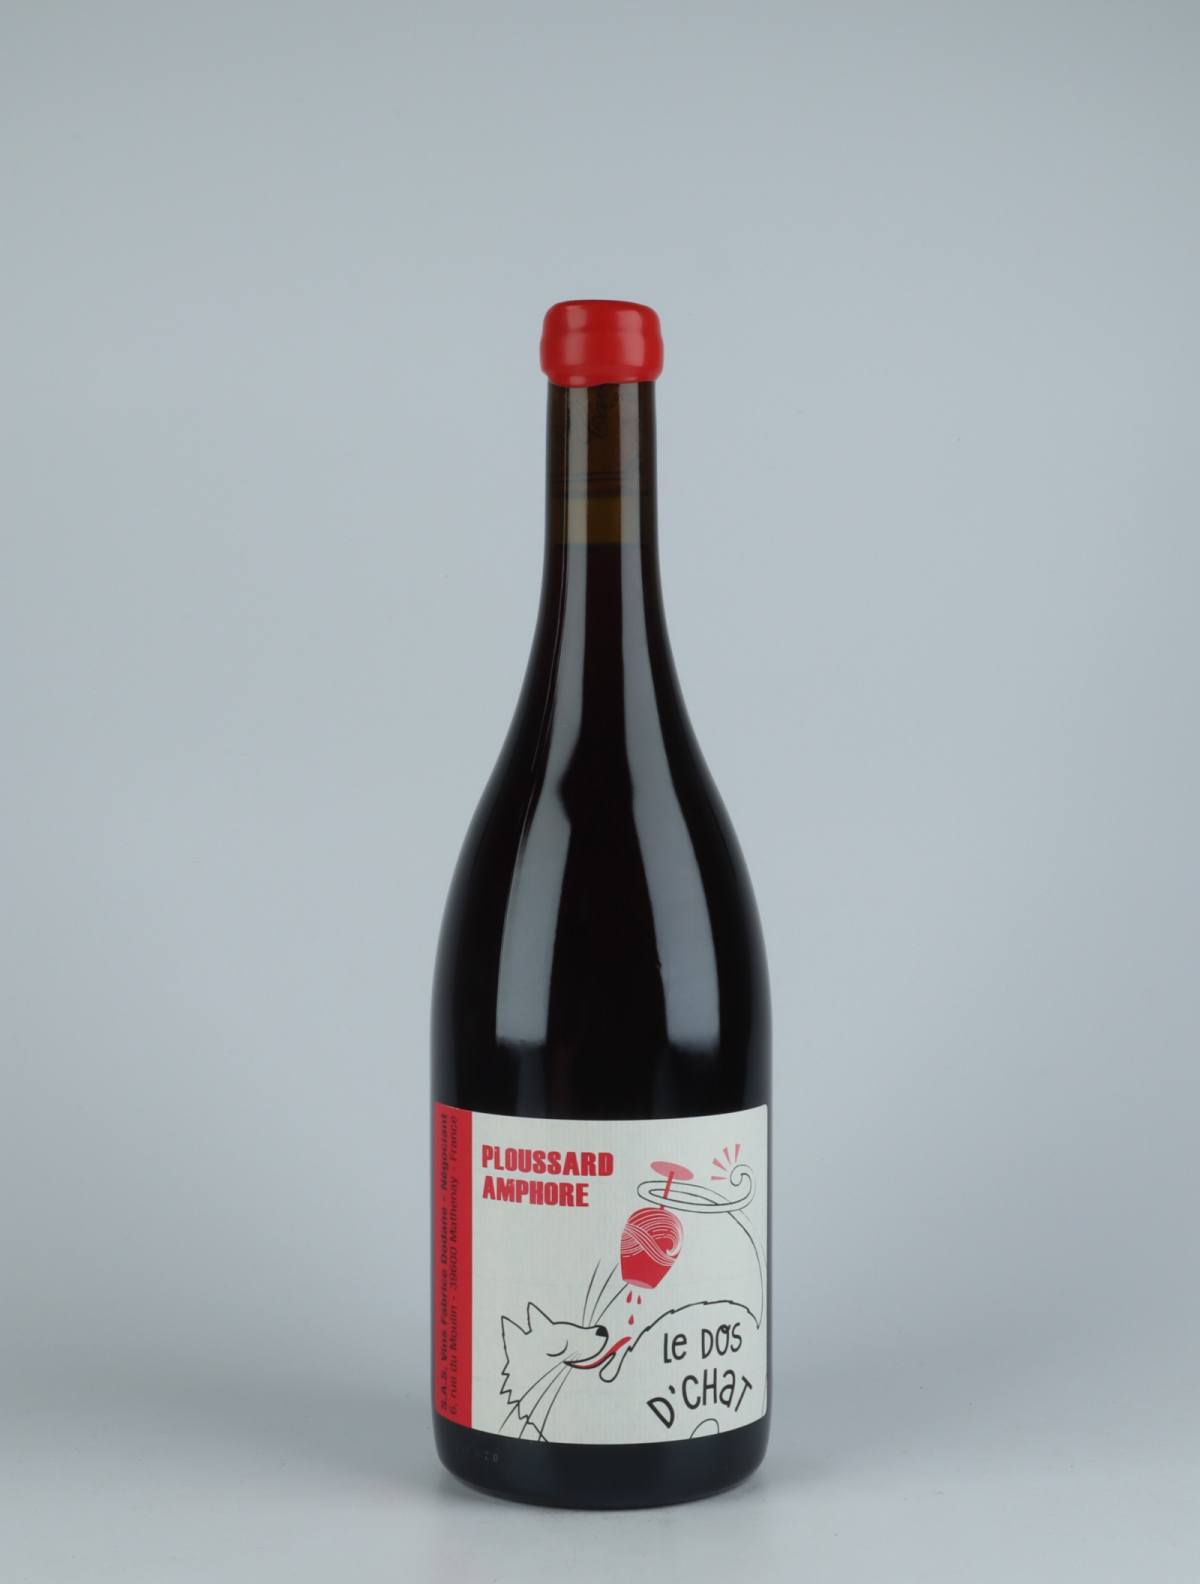 A bottle 2020 Côtes du Jura Rouge - Ploussard Amphore Red wine from Fabrice Dodane, Jura in France